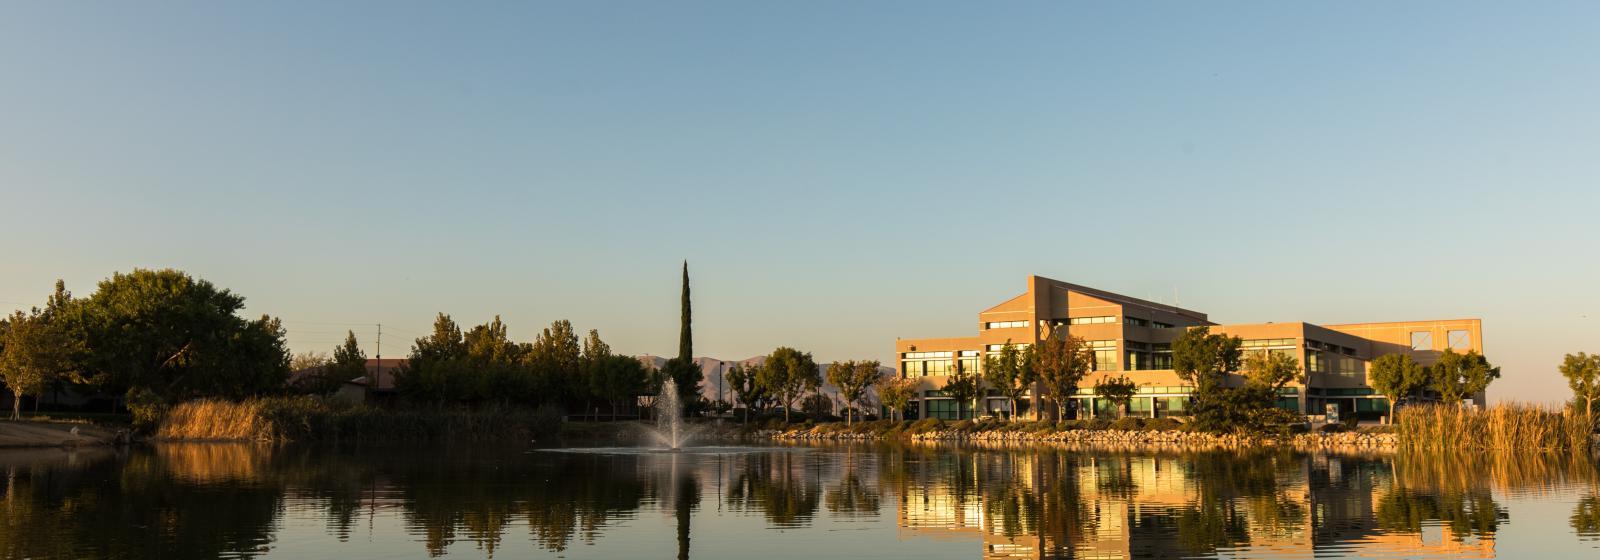 Image of campus building